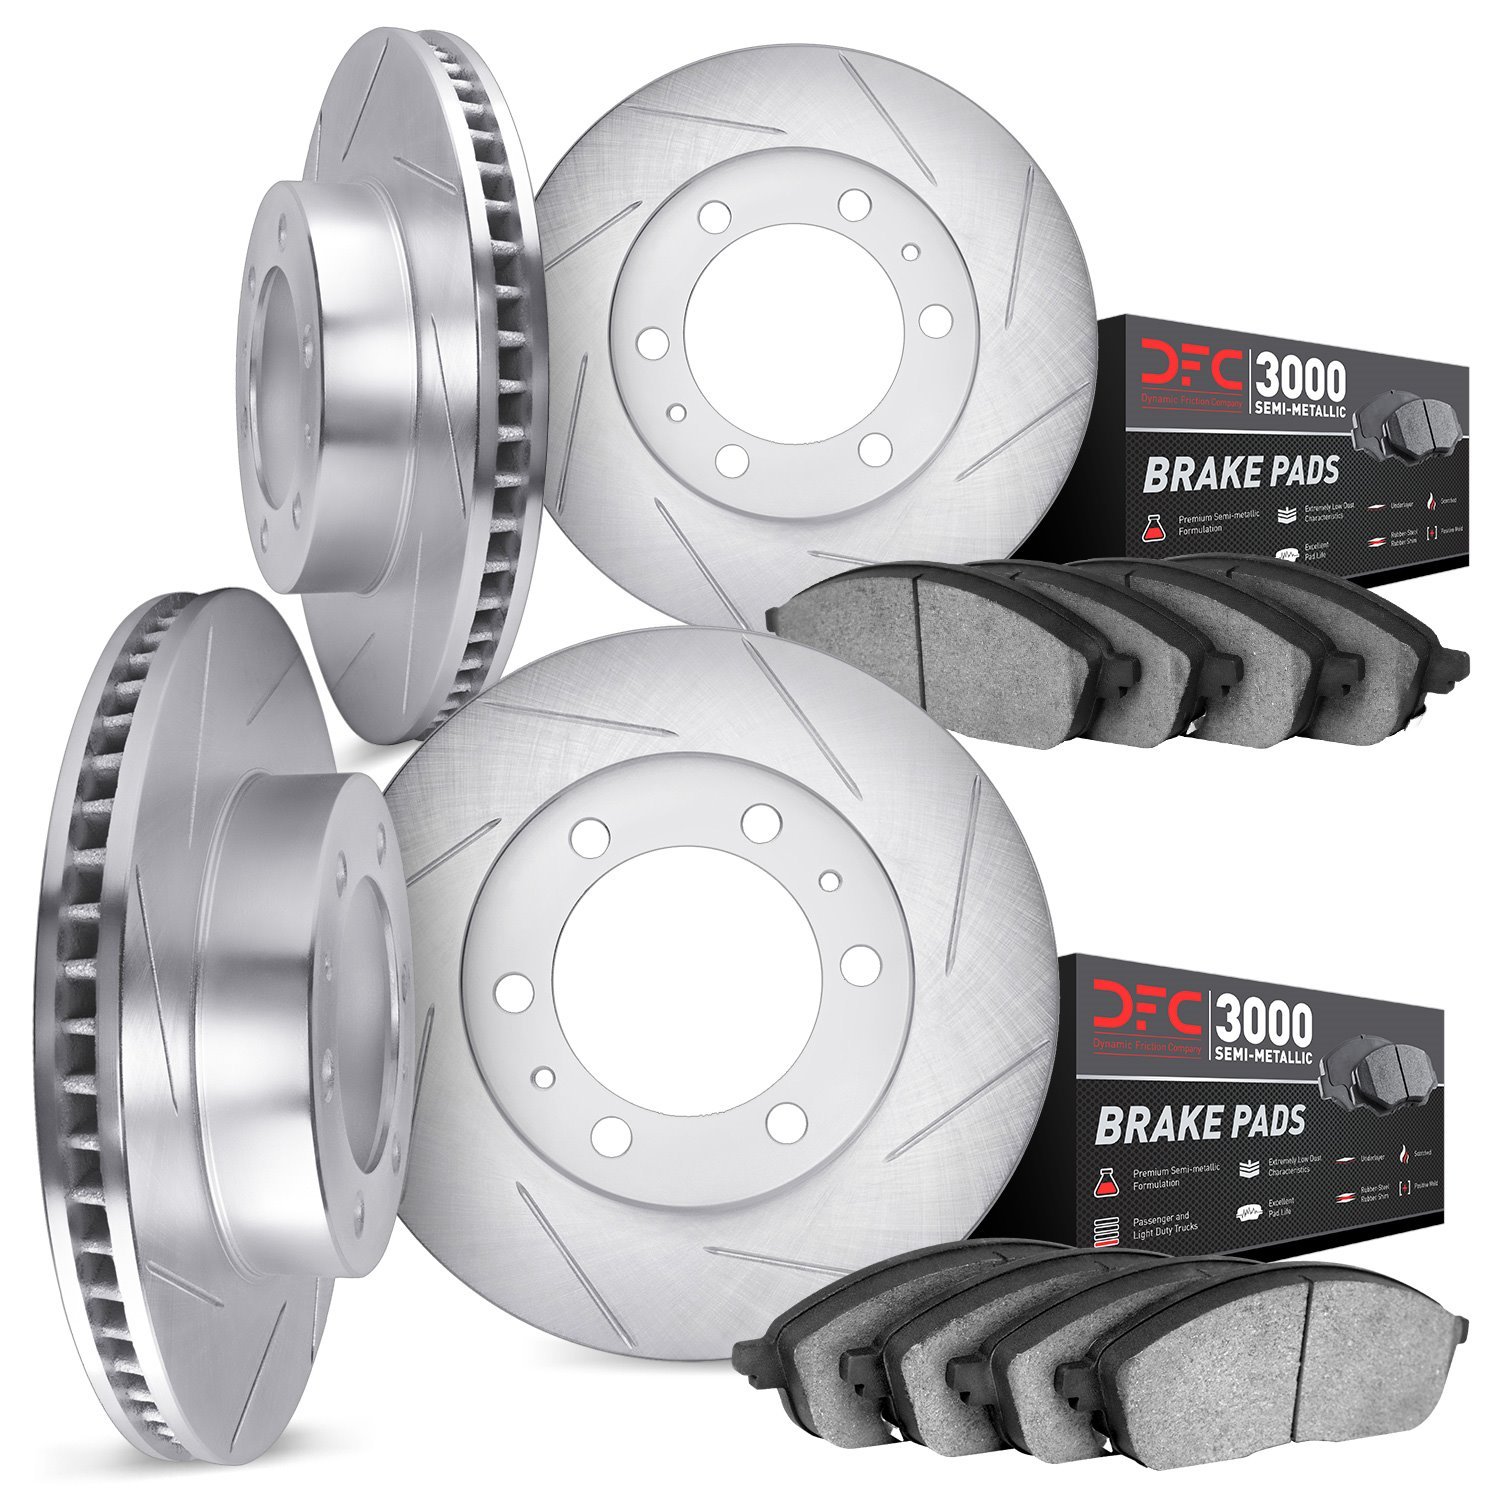 5114-48031 Slotted Brake Rotors with 3000-Series Semi-Metallic Brake Pads Kit & Hardware [Silver], 2007-2014 GM, Position: Front